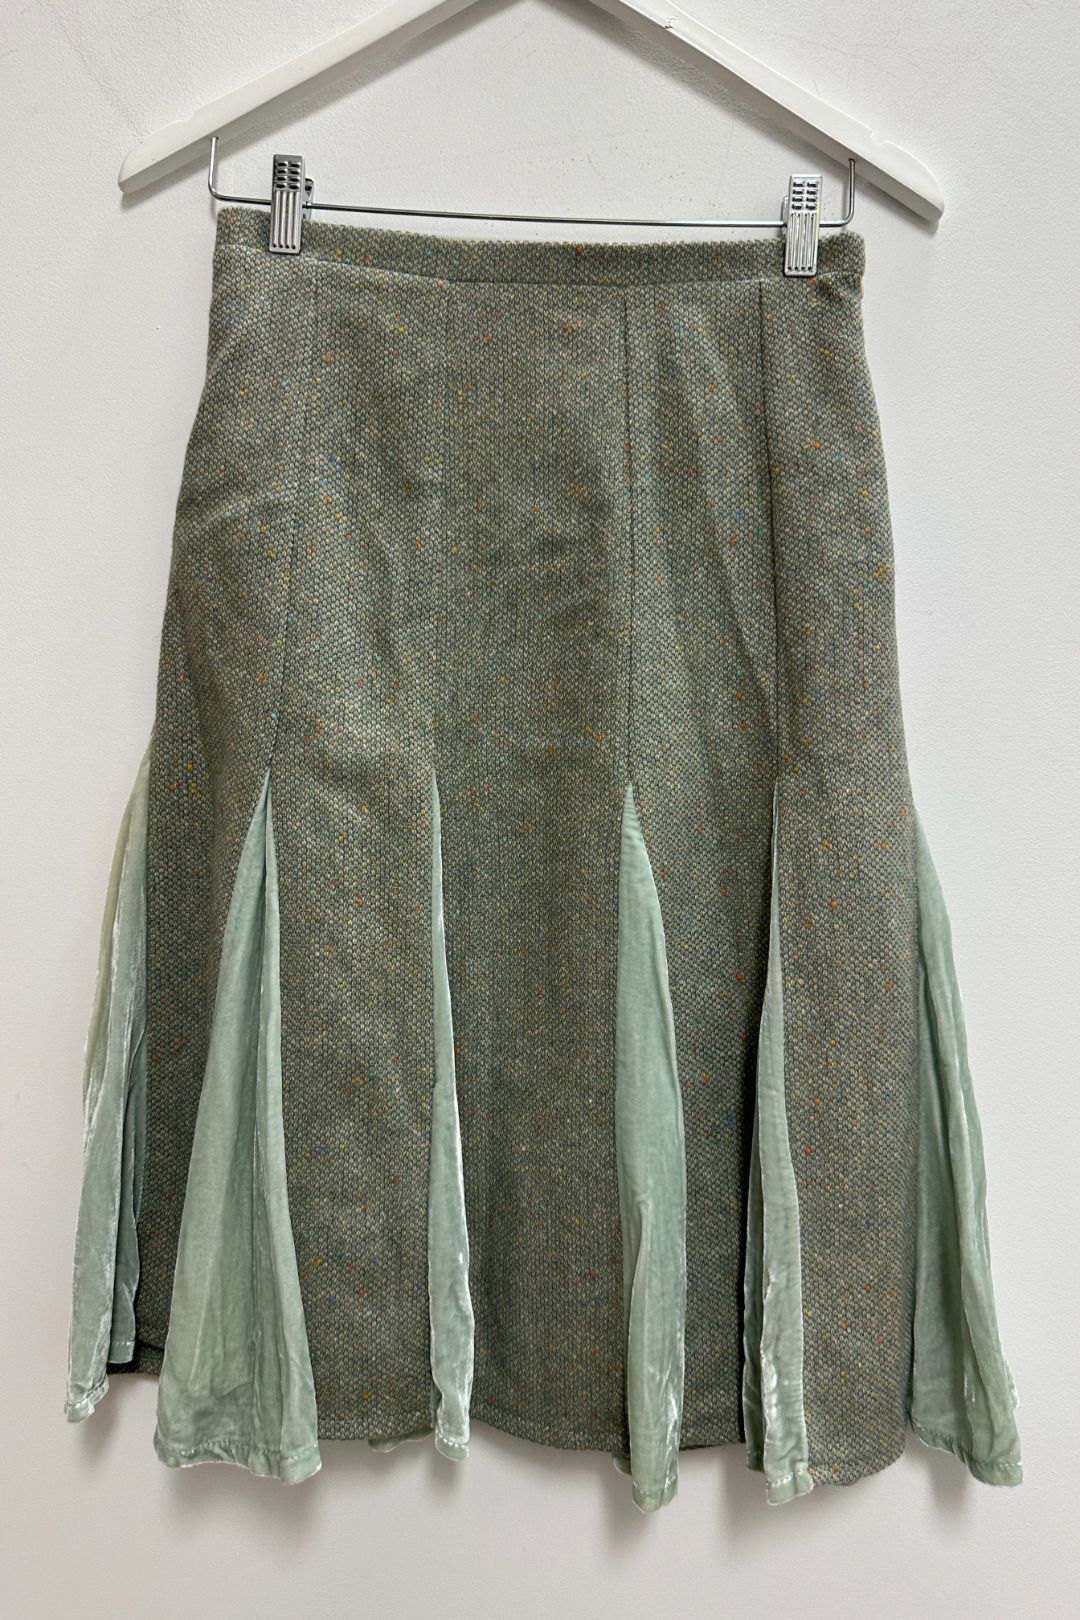 Alannah Hill Green Tweed Knee Length Skirt